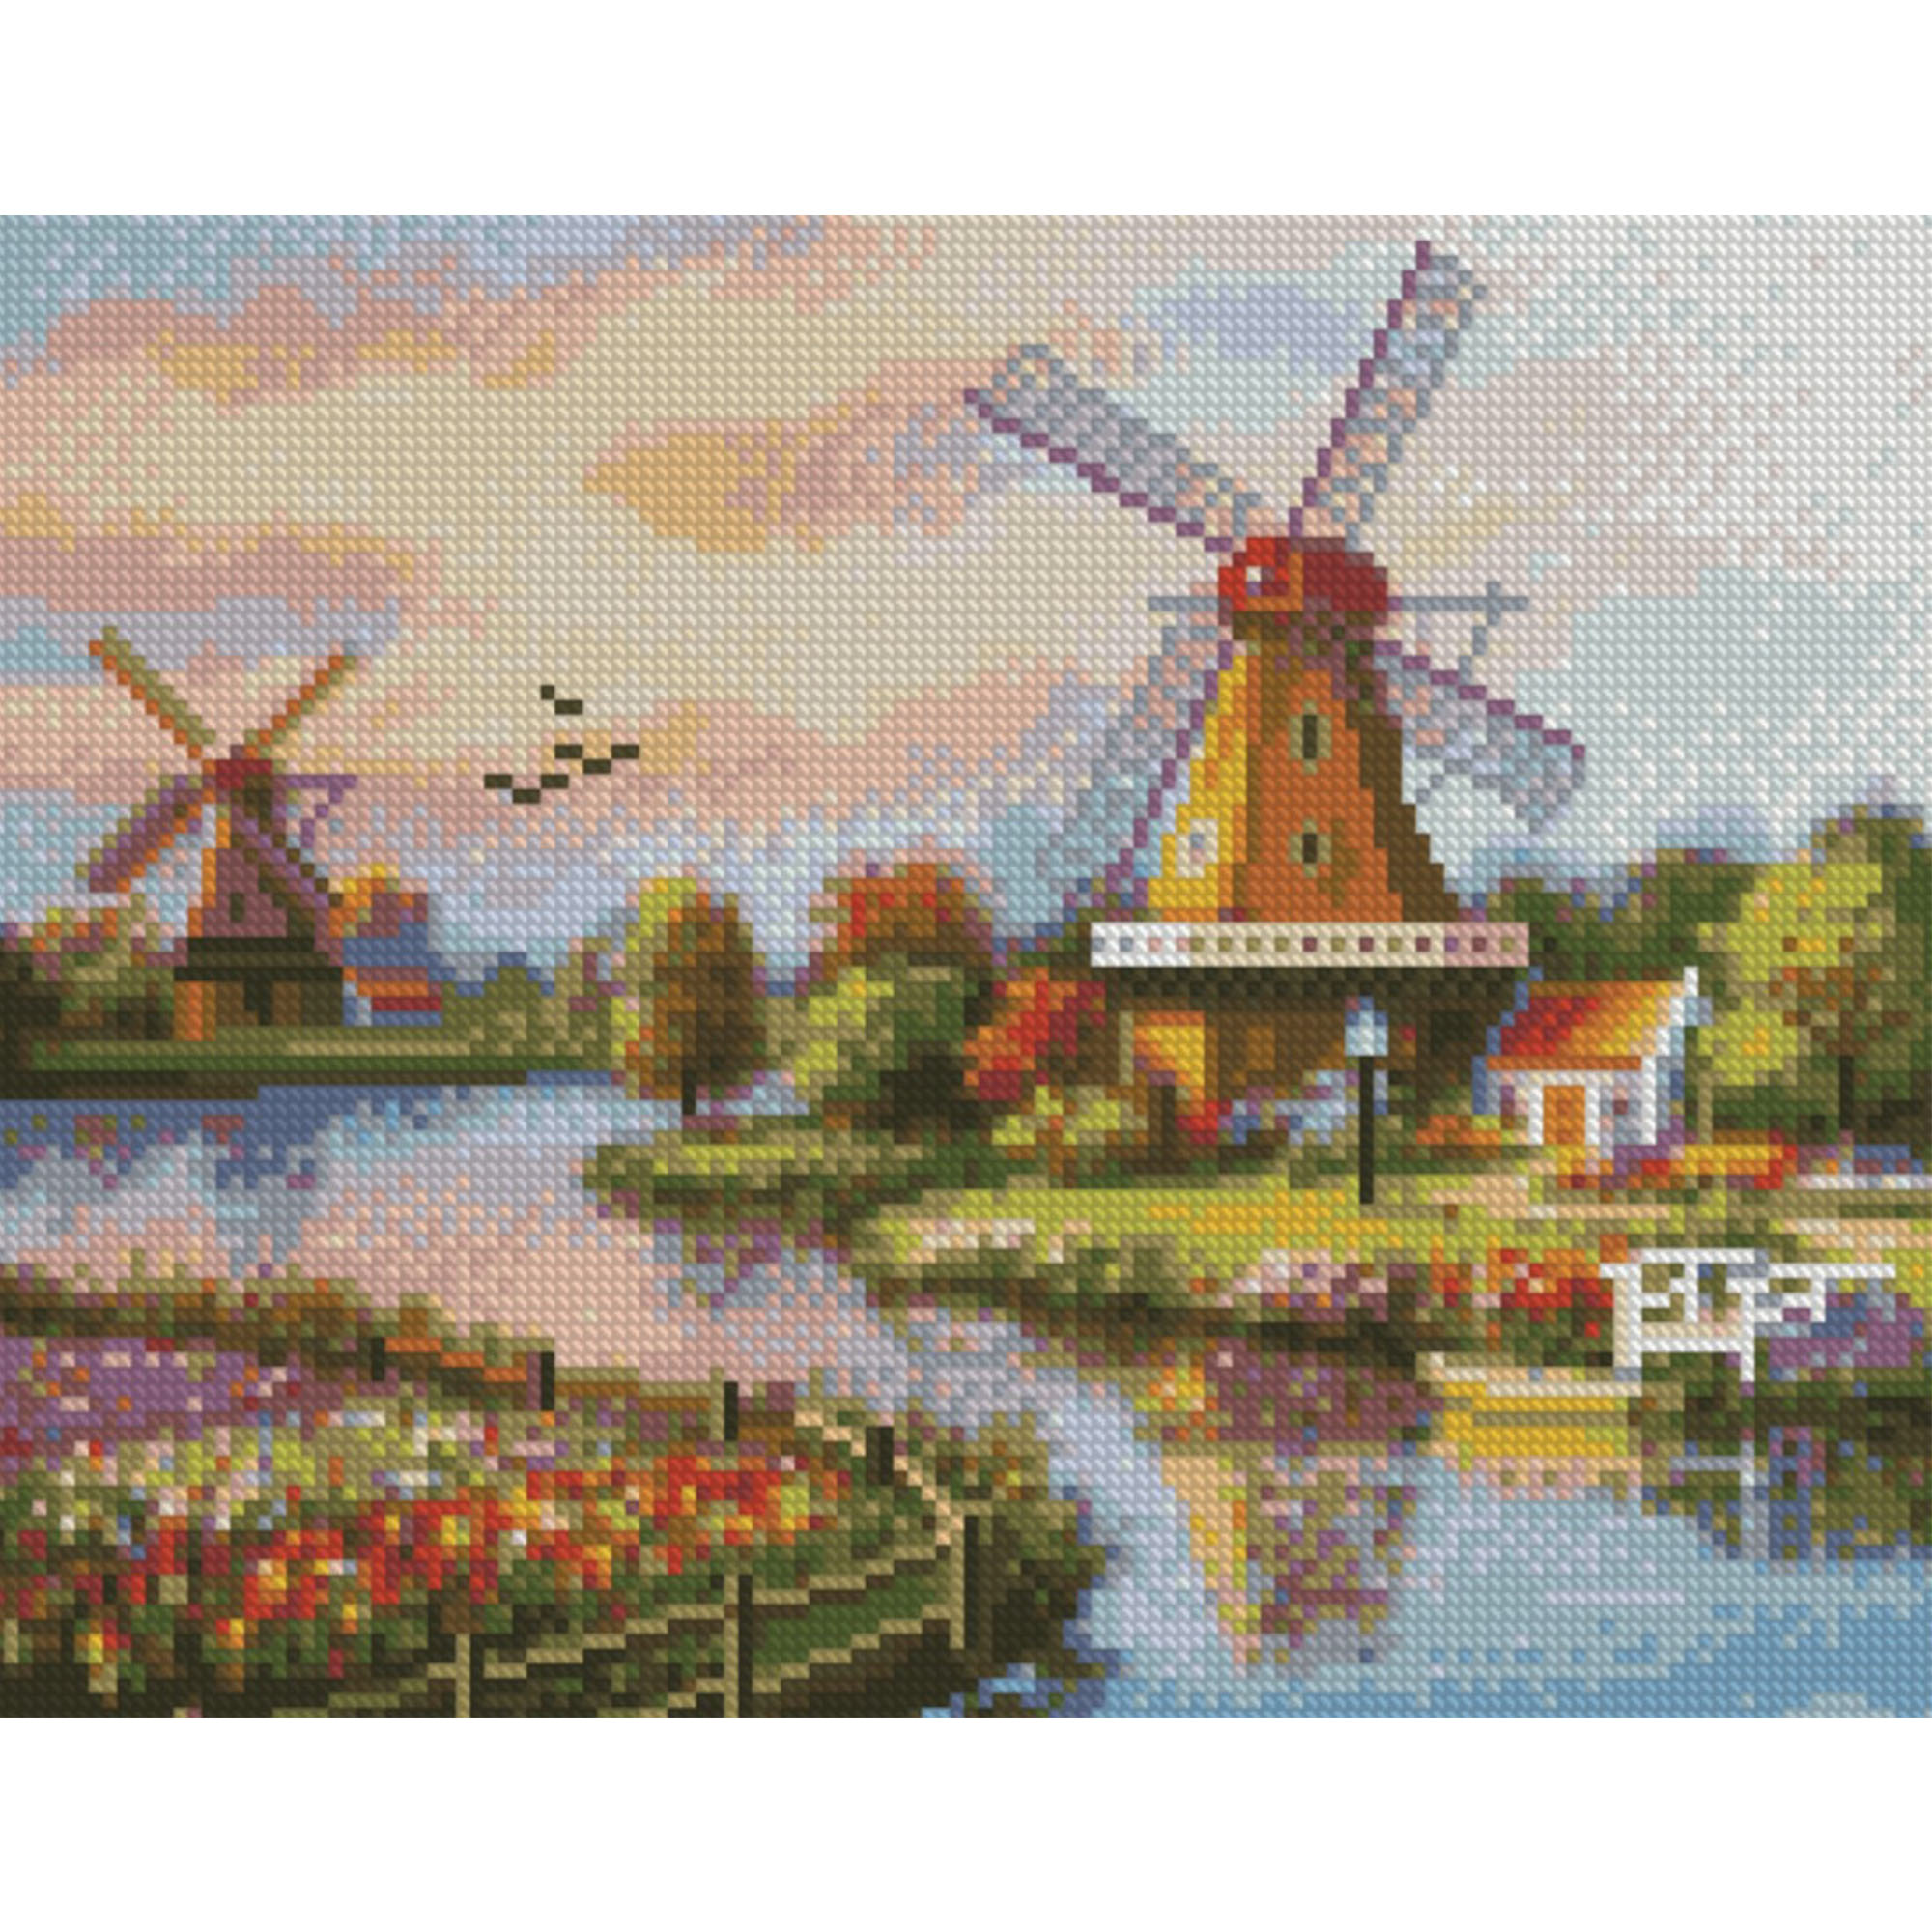 Diamond mosaic Premium "Mills by the river", 30x40 cm